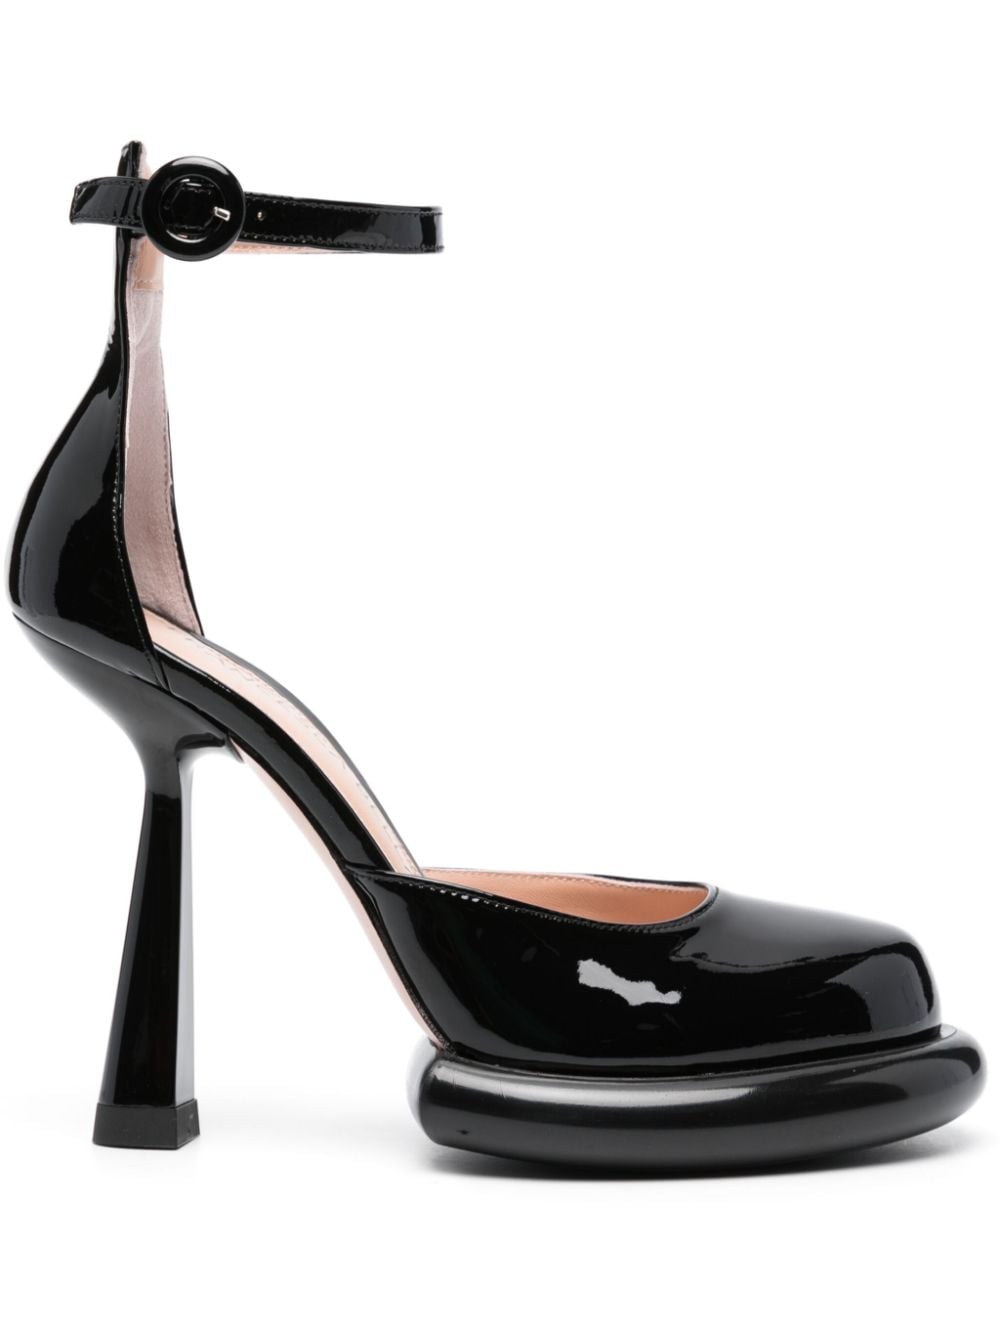 Francesca Bellavita Kelly 125mm patent leather pumps - Black von Francesca Bellavita